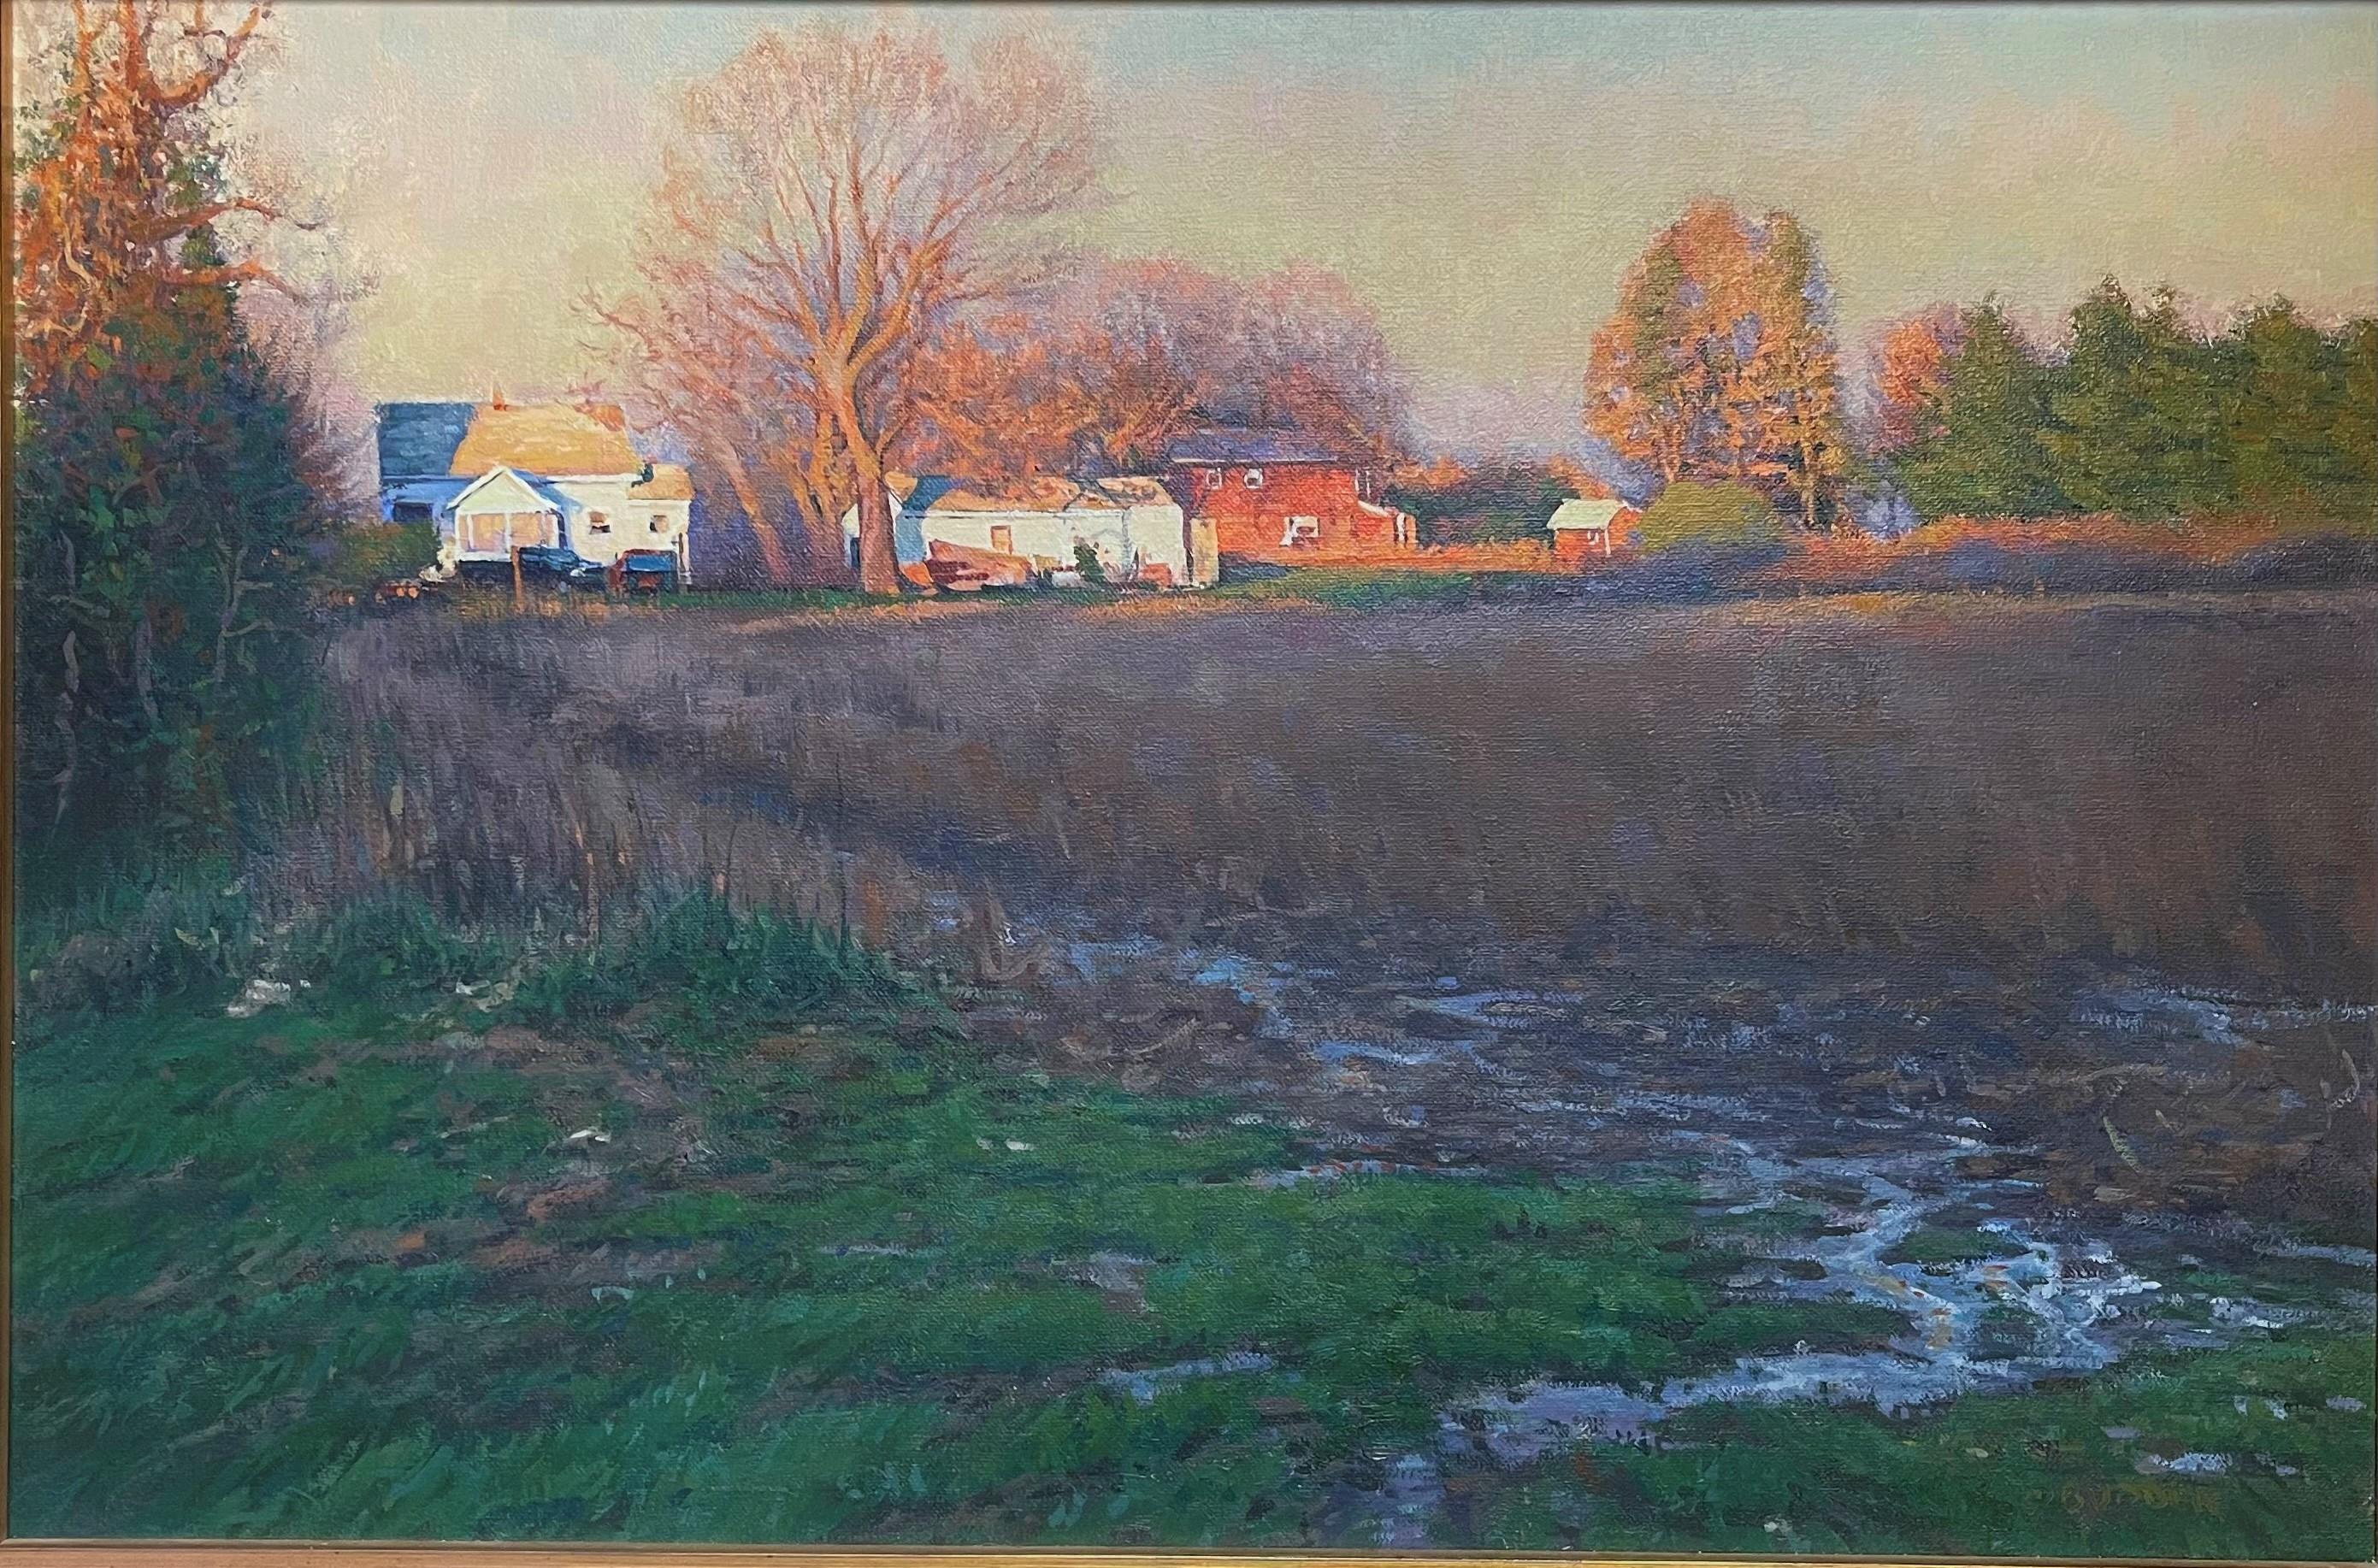  Impressionistic Rural Farm Landscape Oil Painting Michael Budden Shadow & Light For Sale 1